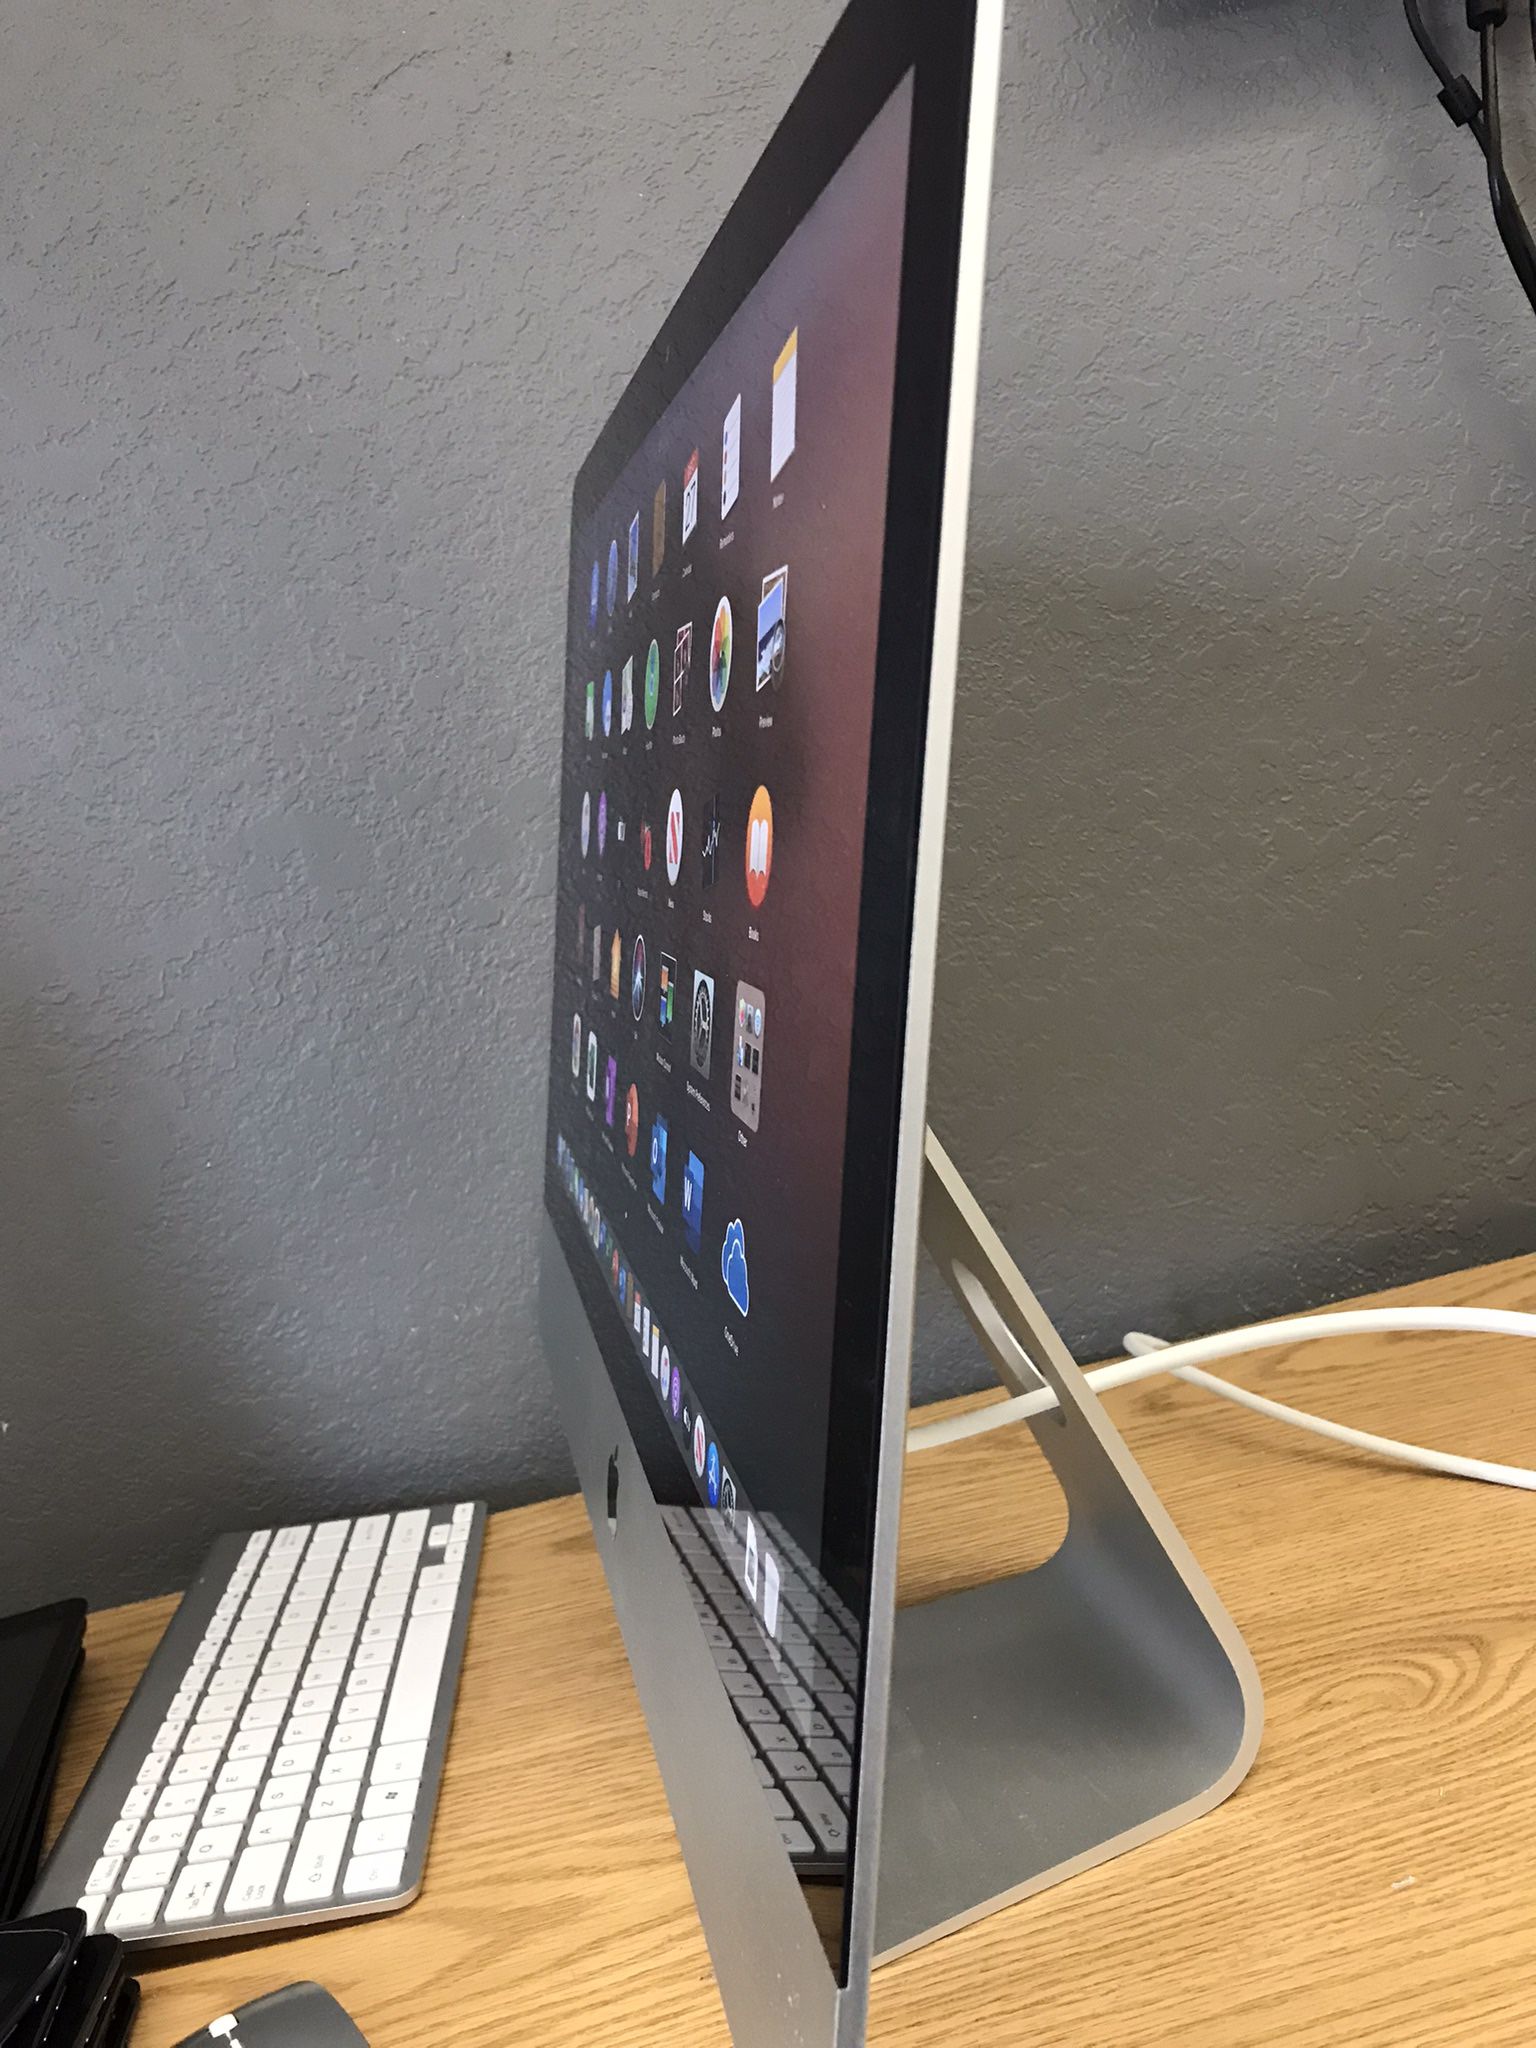 Apple iMac 21.5 inch- Mac OS Catalina - Early 2013